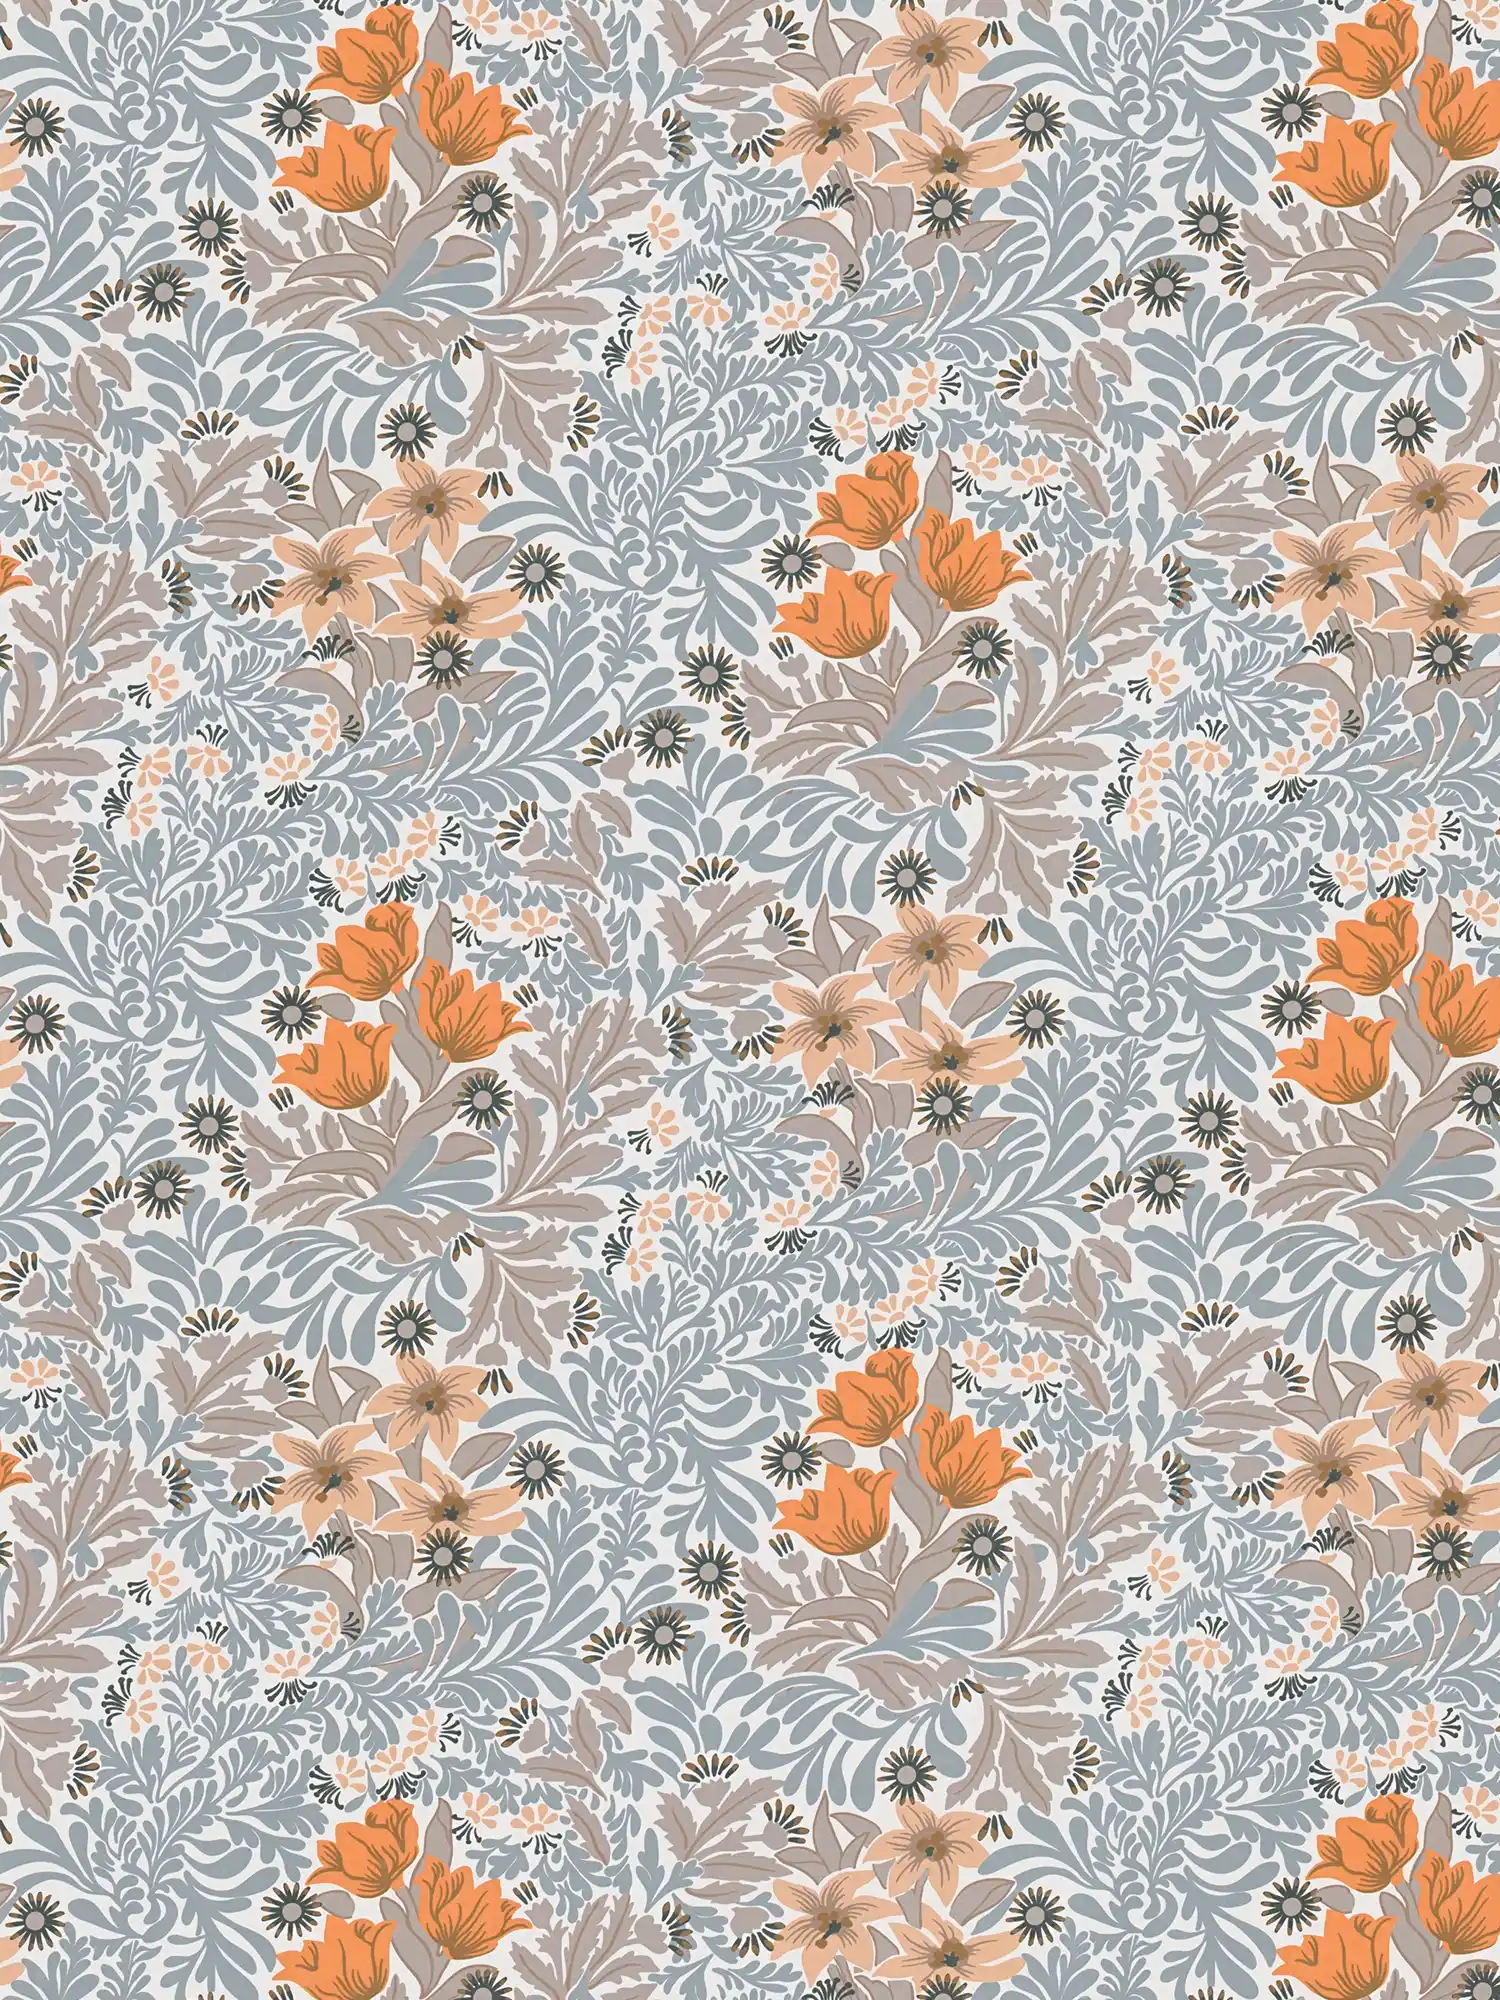 Wallpaper with flowers and leaf tendrils - blue, orange, beige
